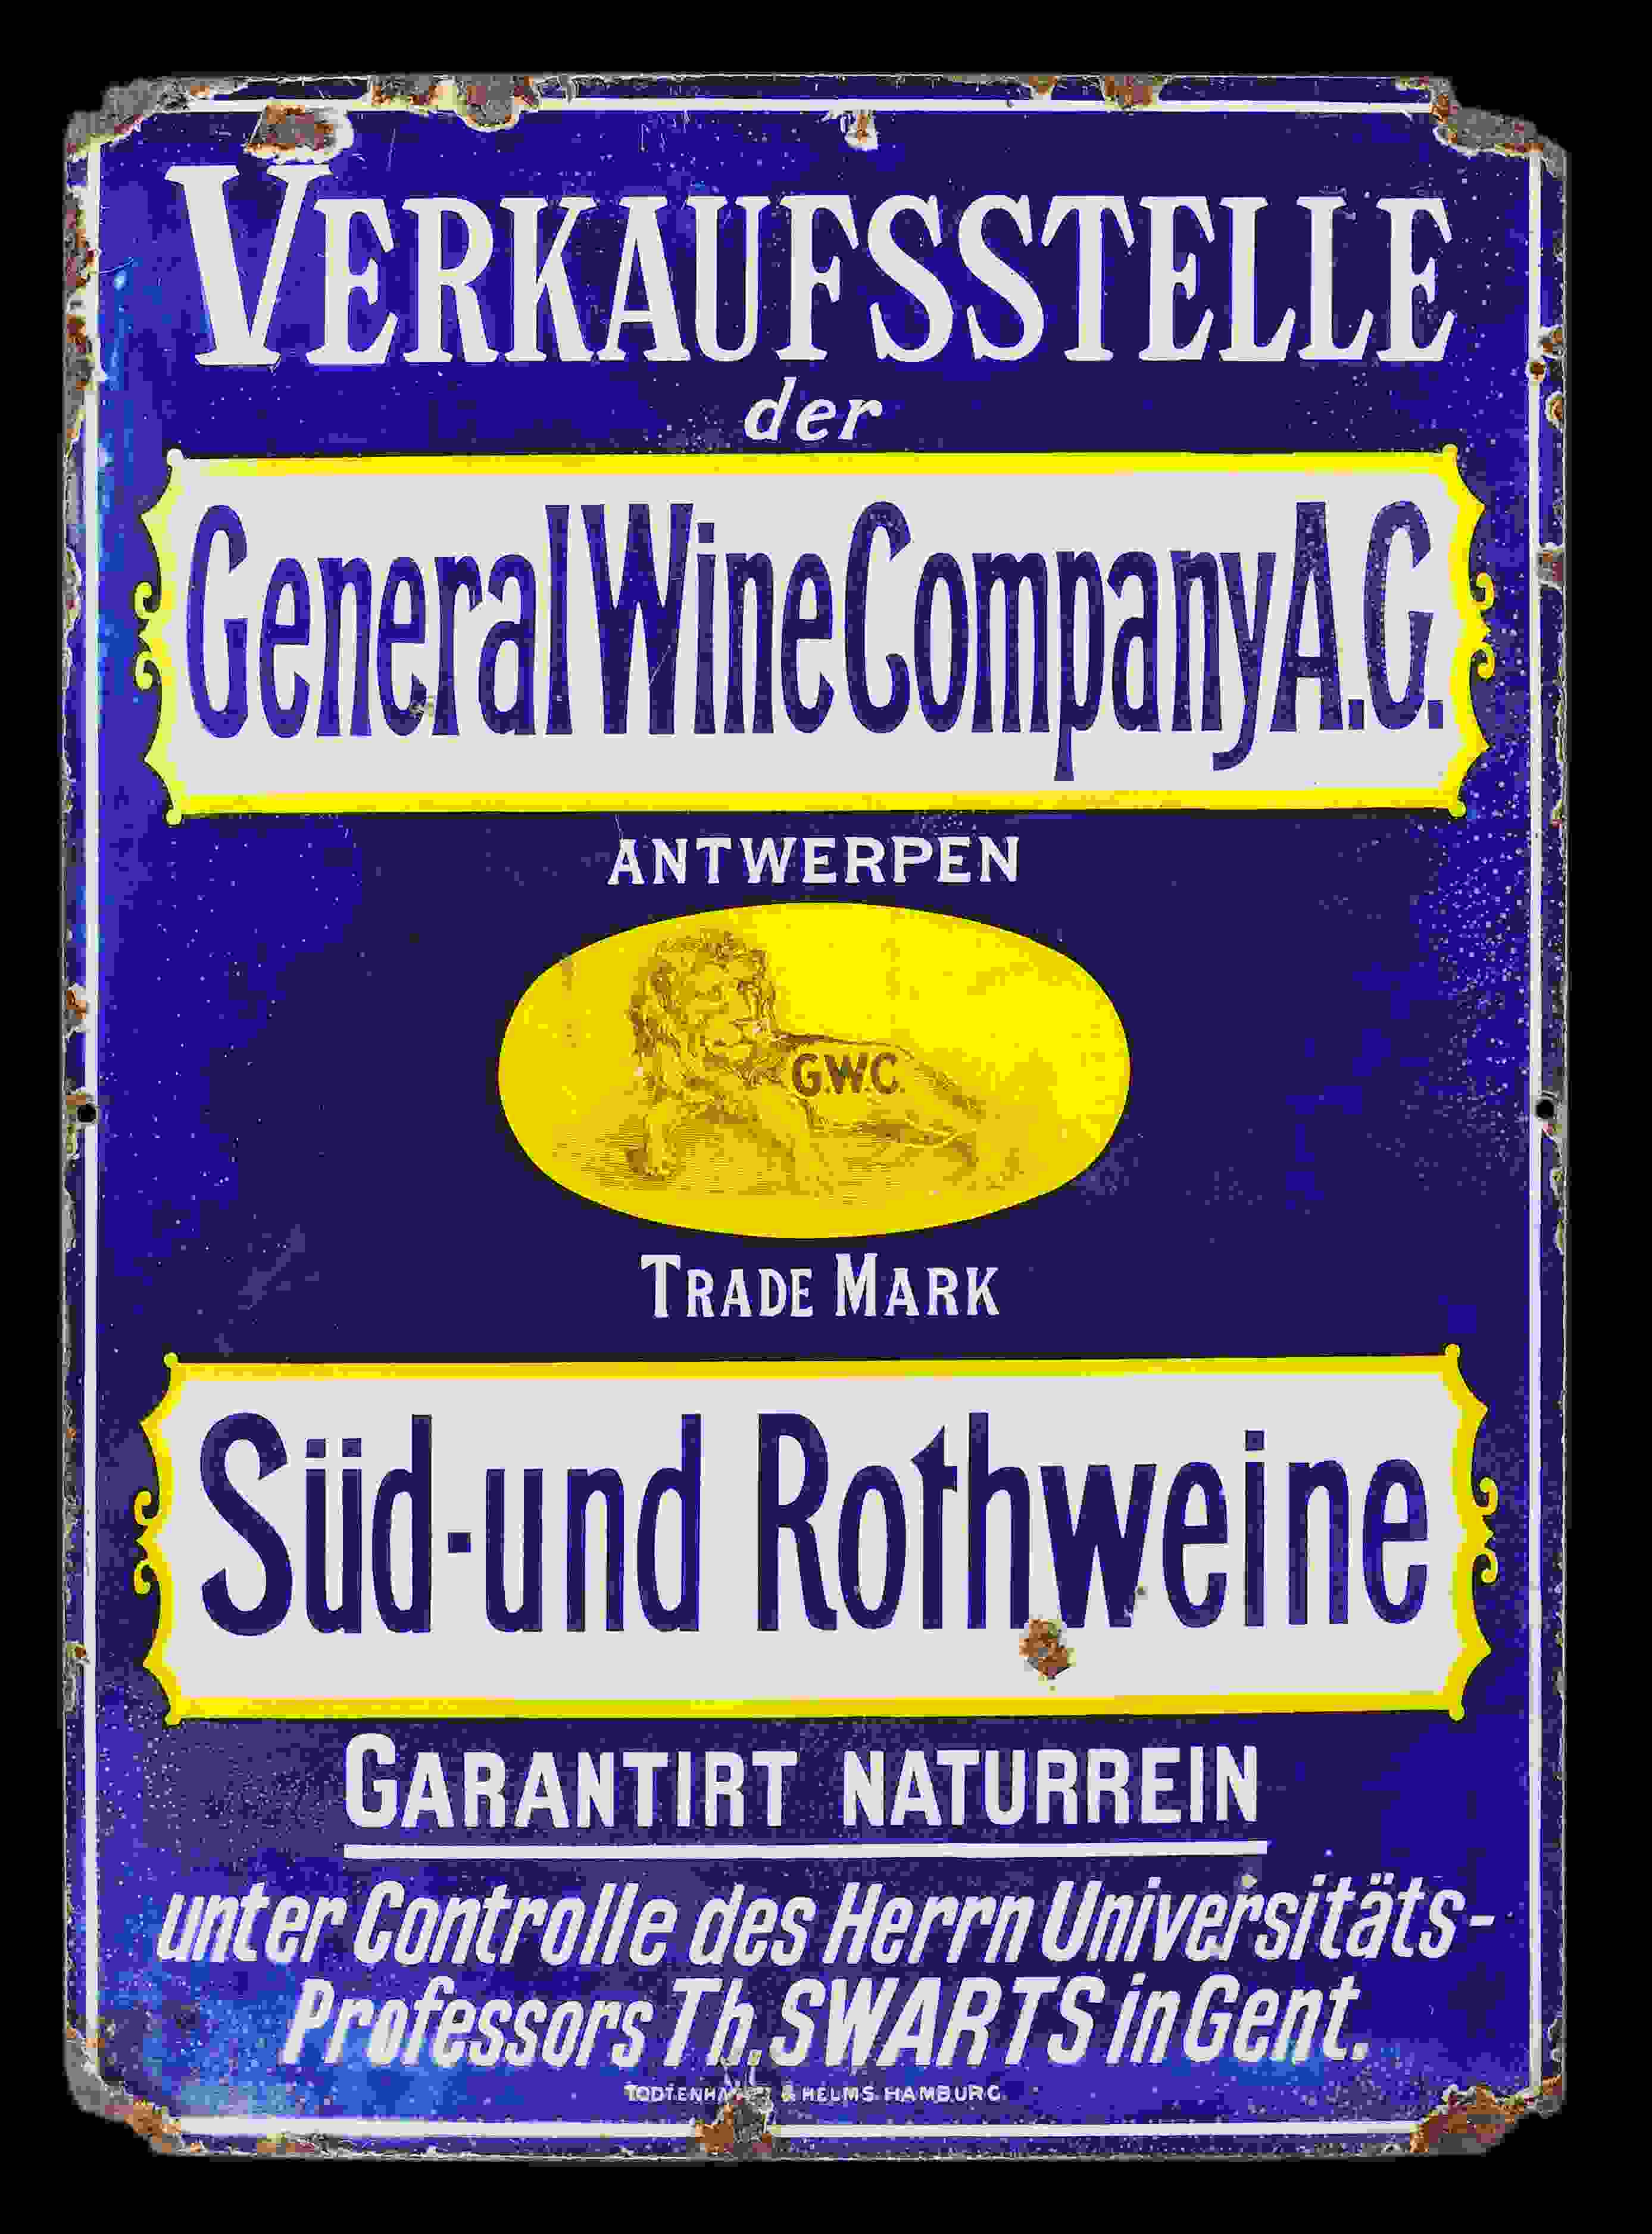 General Wine Company A.G. 